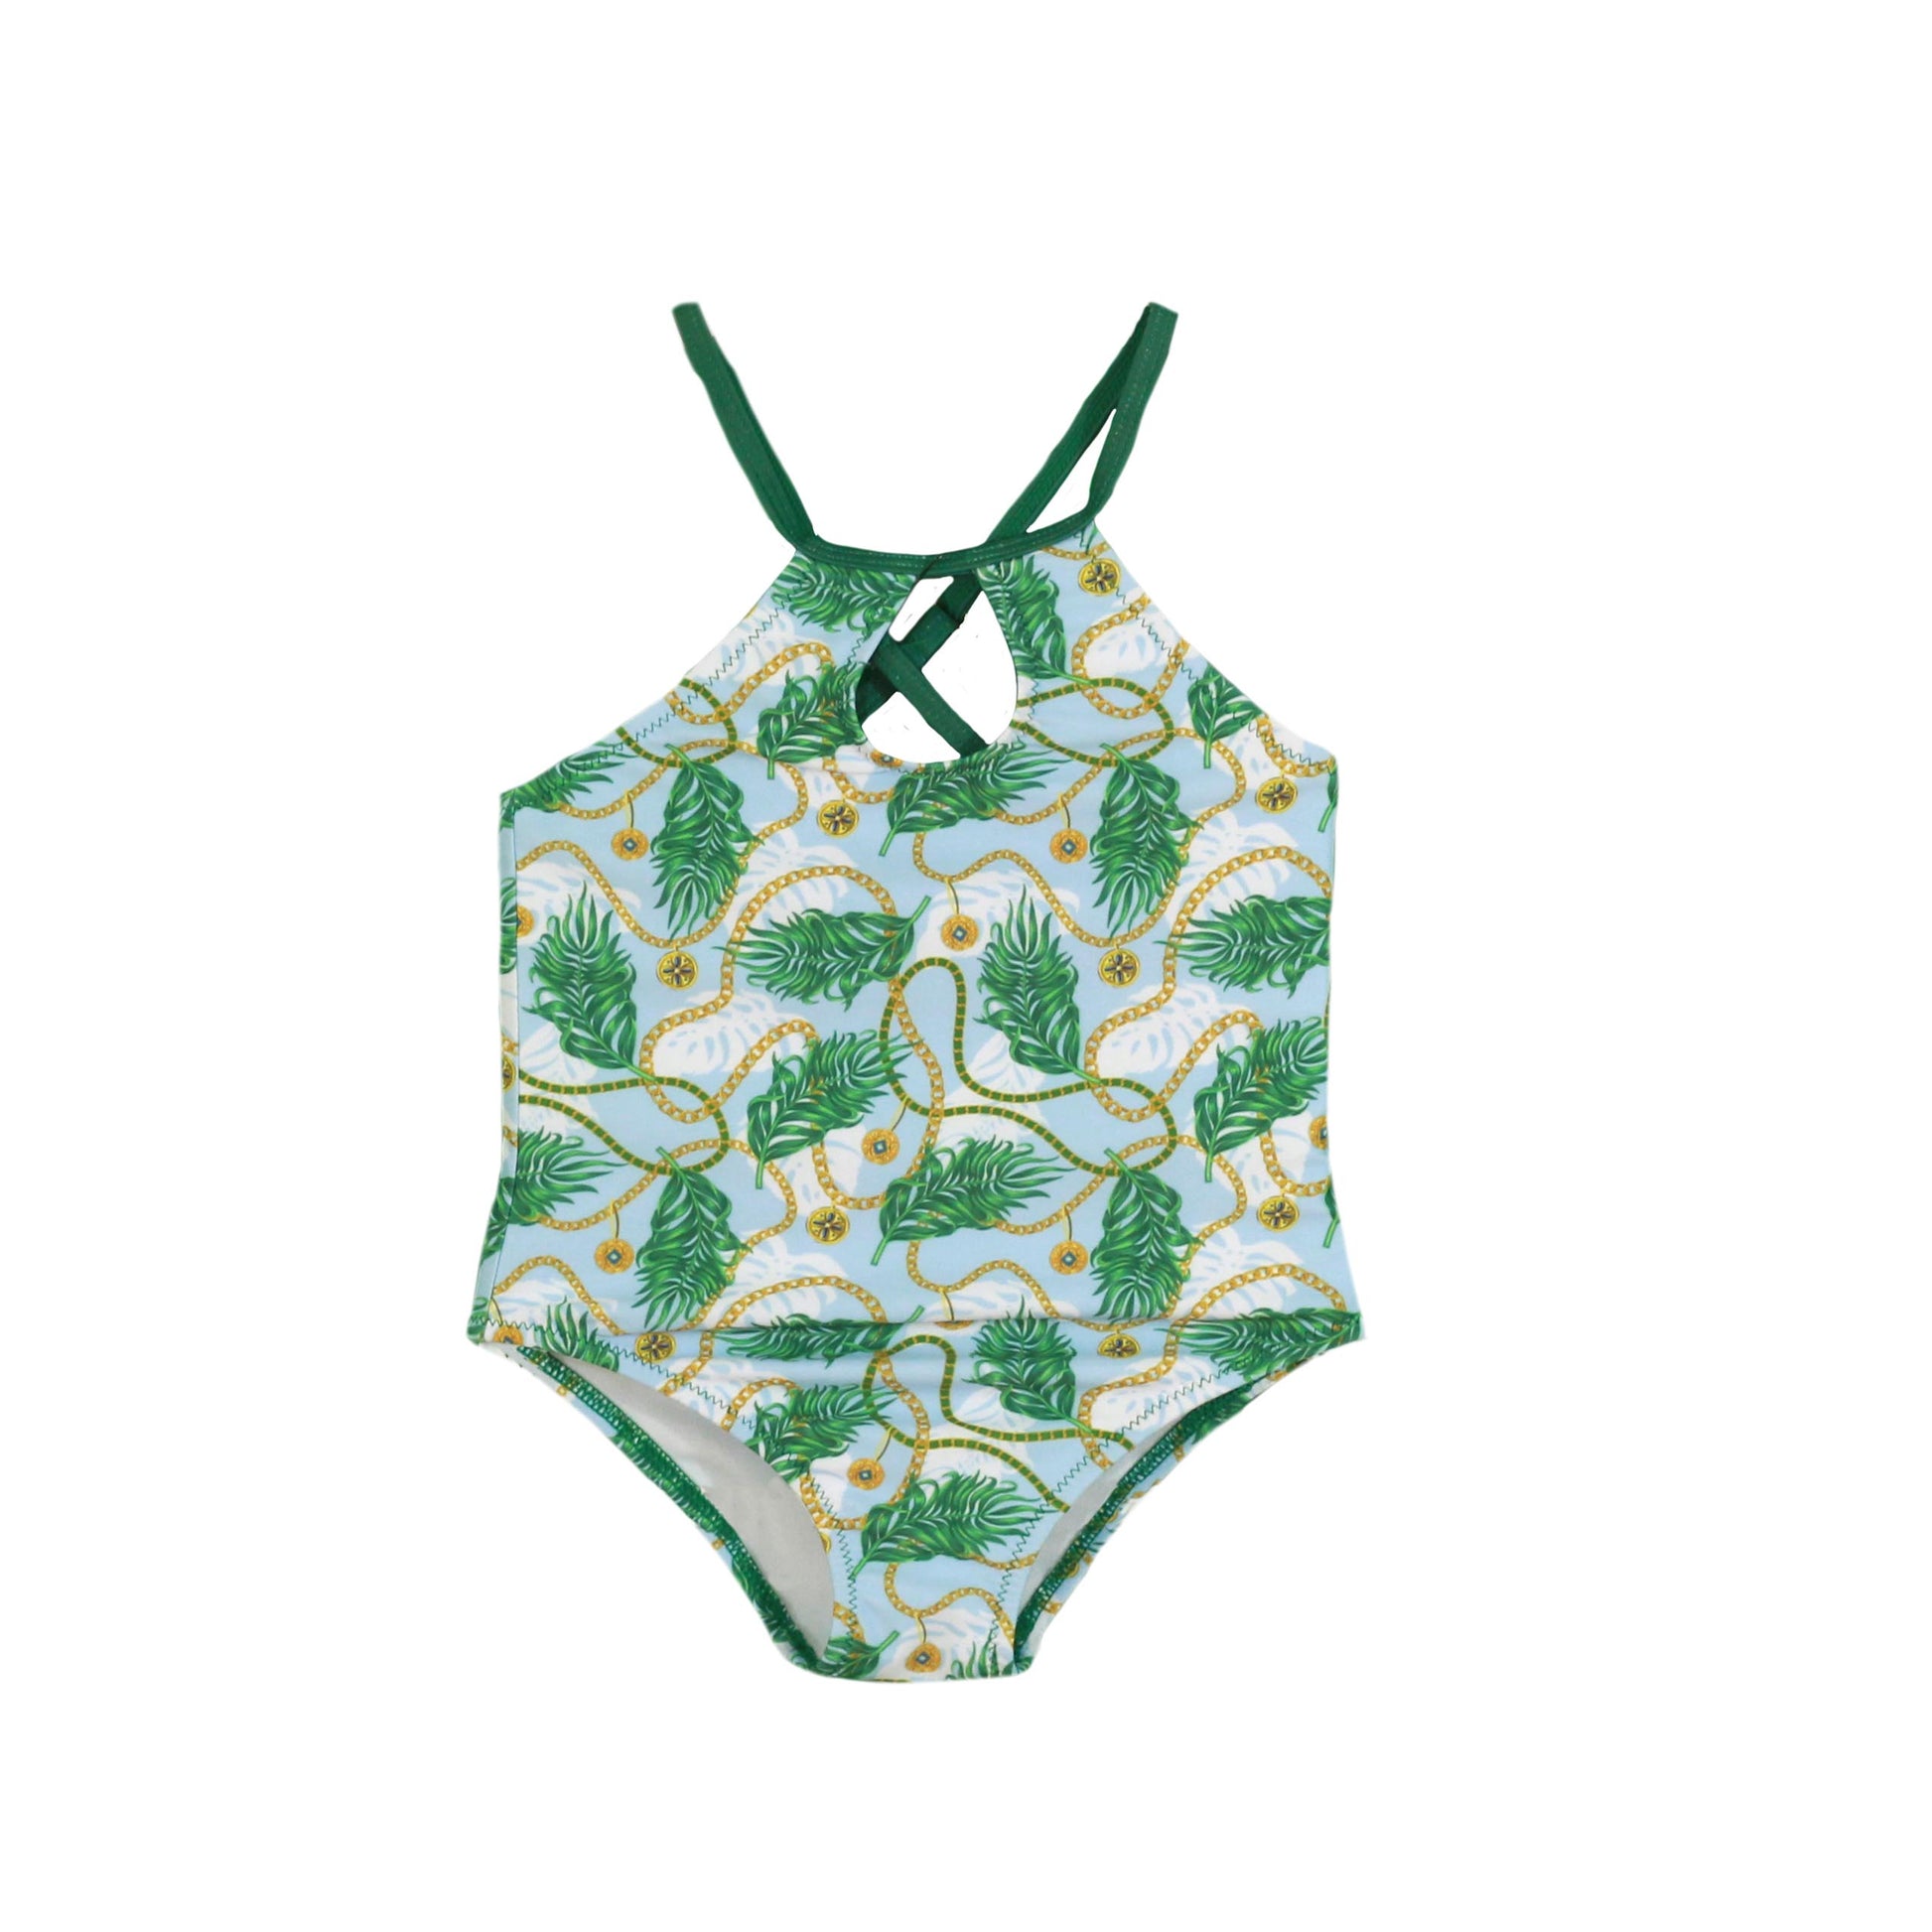 SS23 MIRANDA Palm Leaf Print Girls Swimsuit - 422B